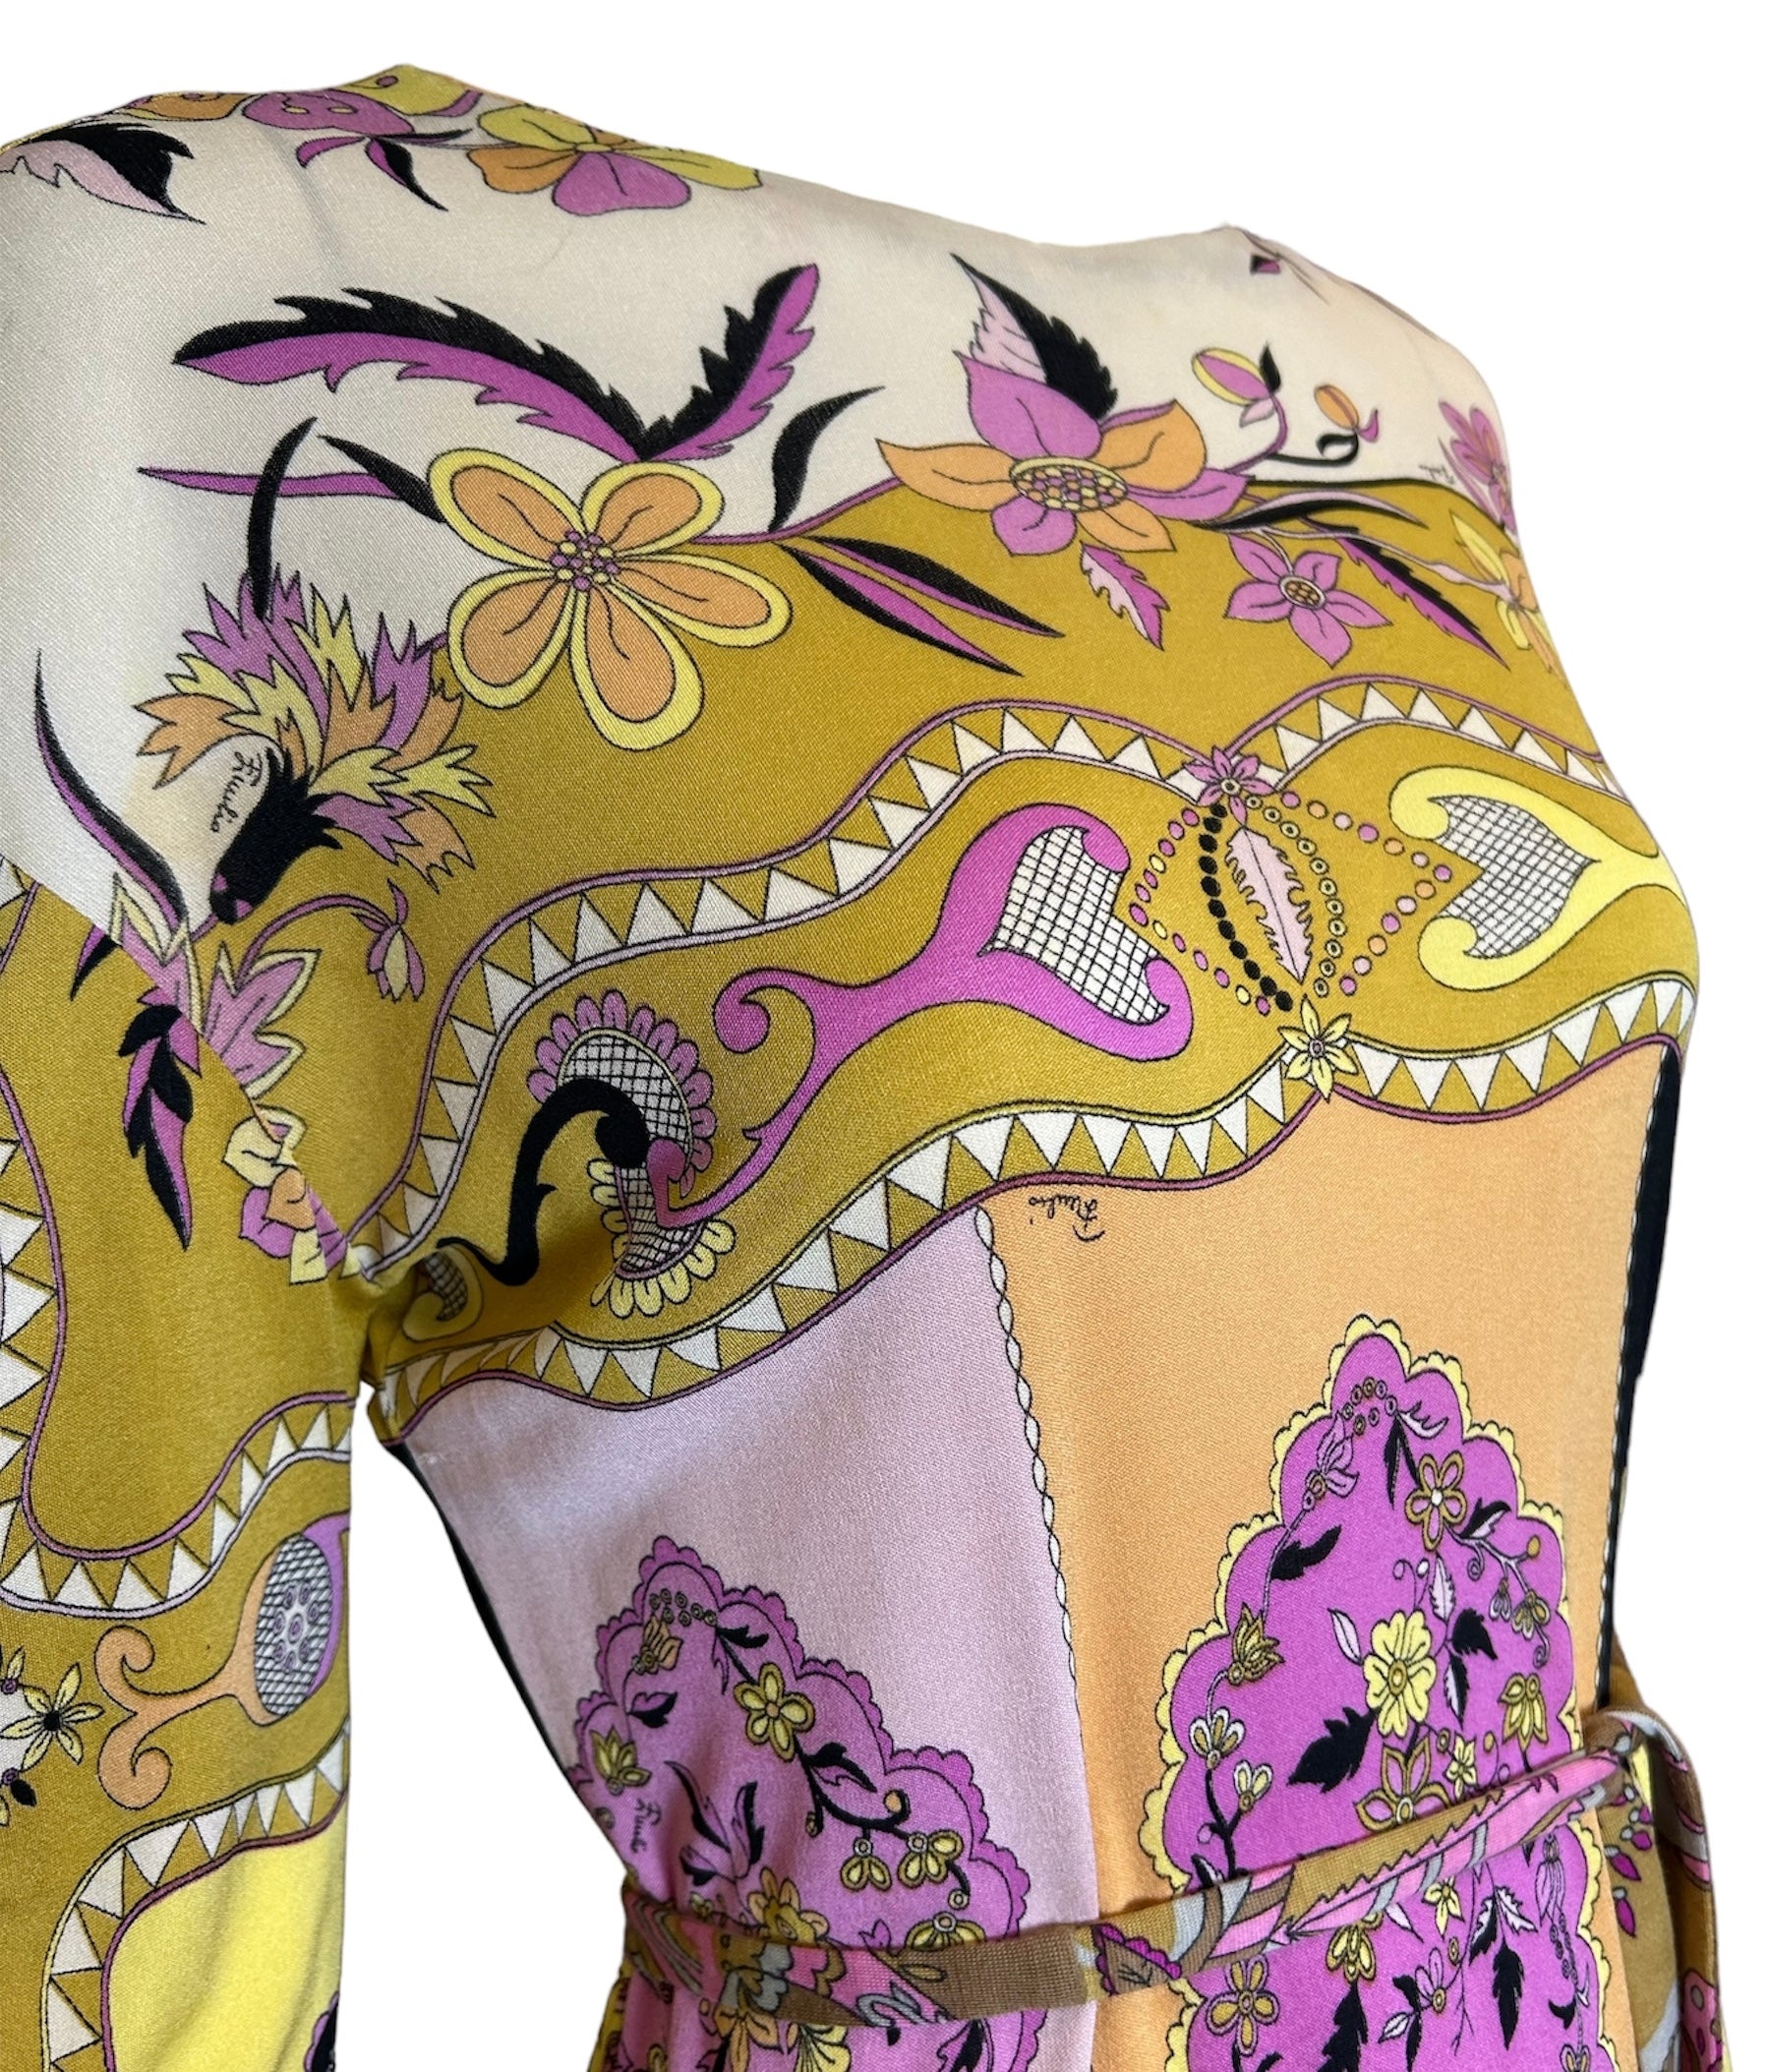  Pucci 1960s Floral Pastels Silk Jersey Dress w/ Belt DETAIL PHOTO 2 OF 6